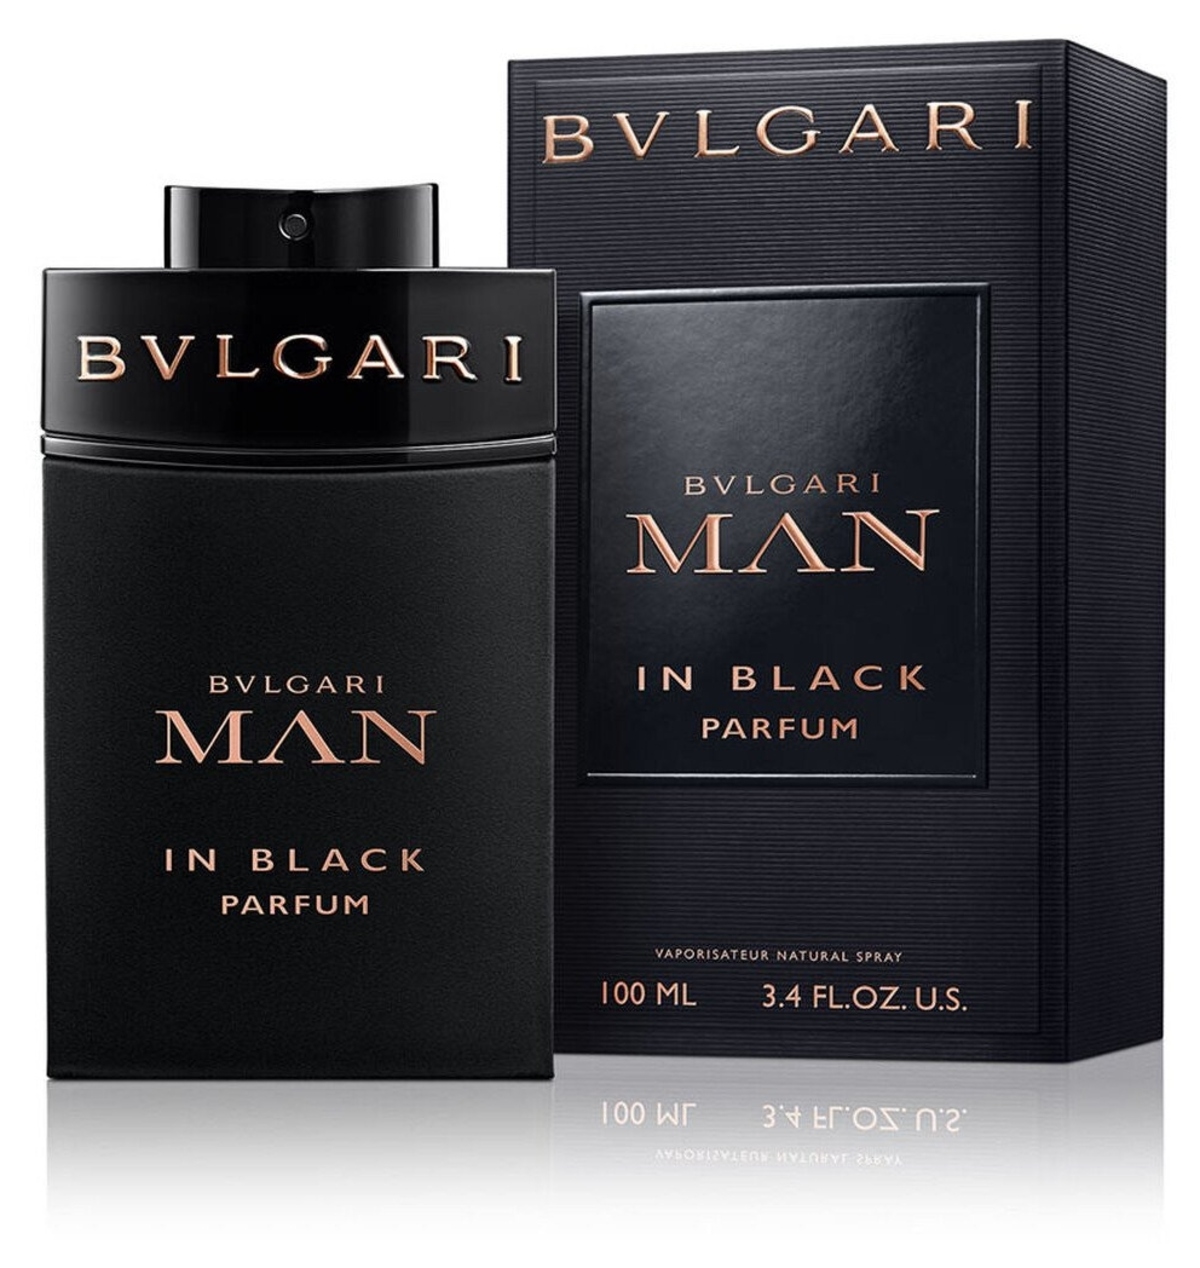 Bvlgari Man In Black Parfum - Bvlgari